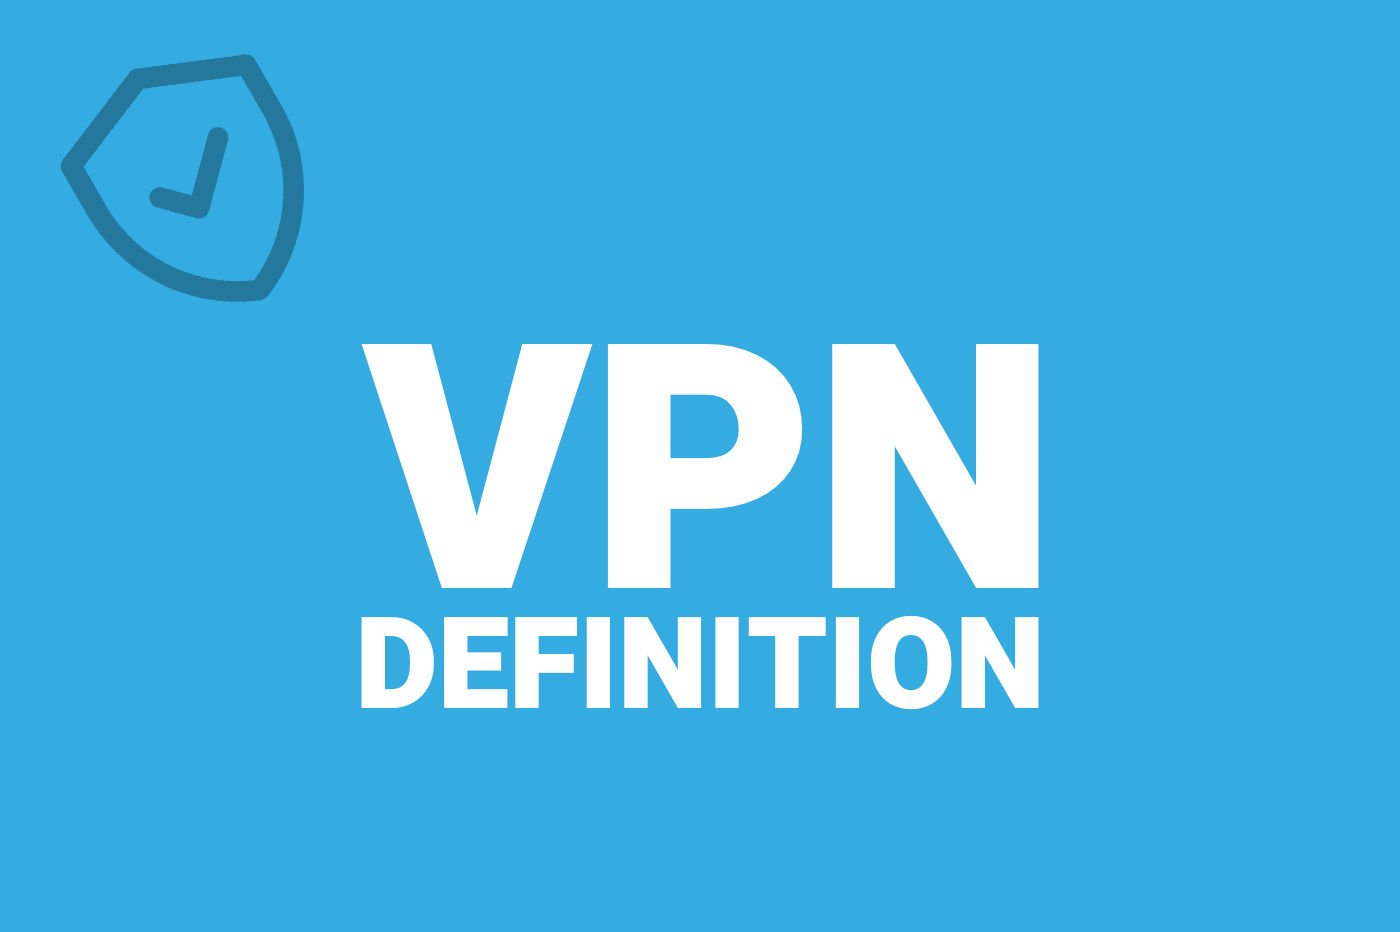 VPN definition